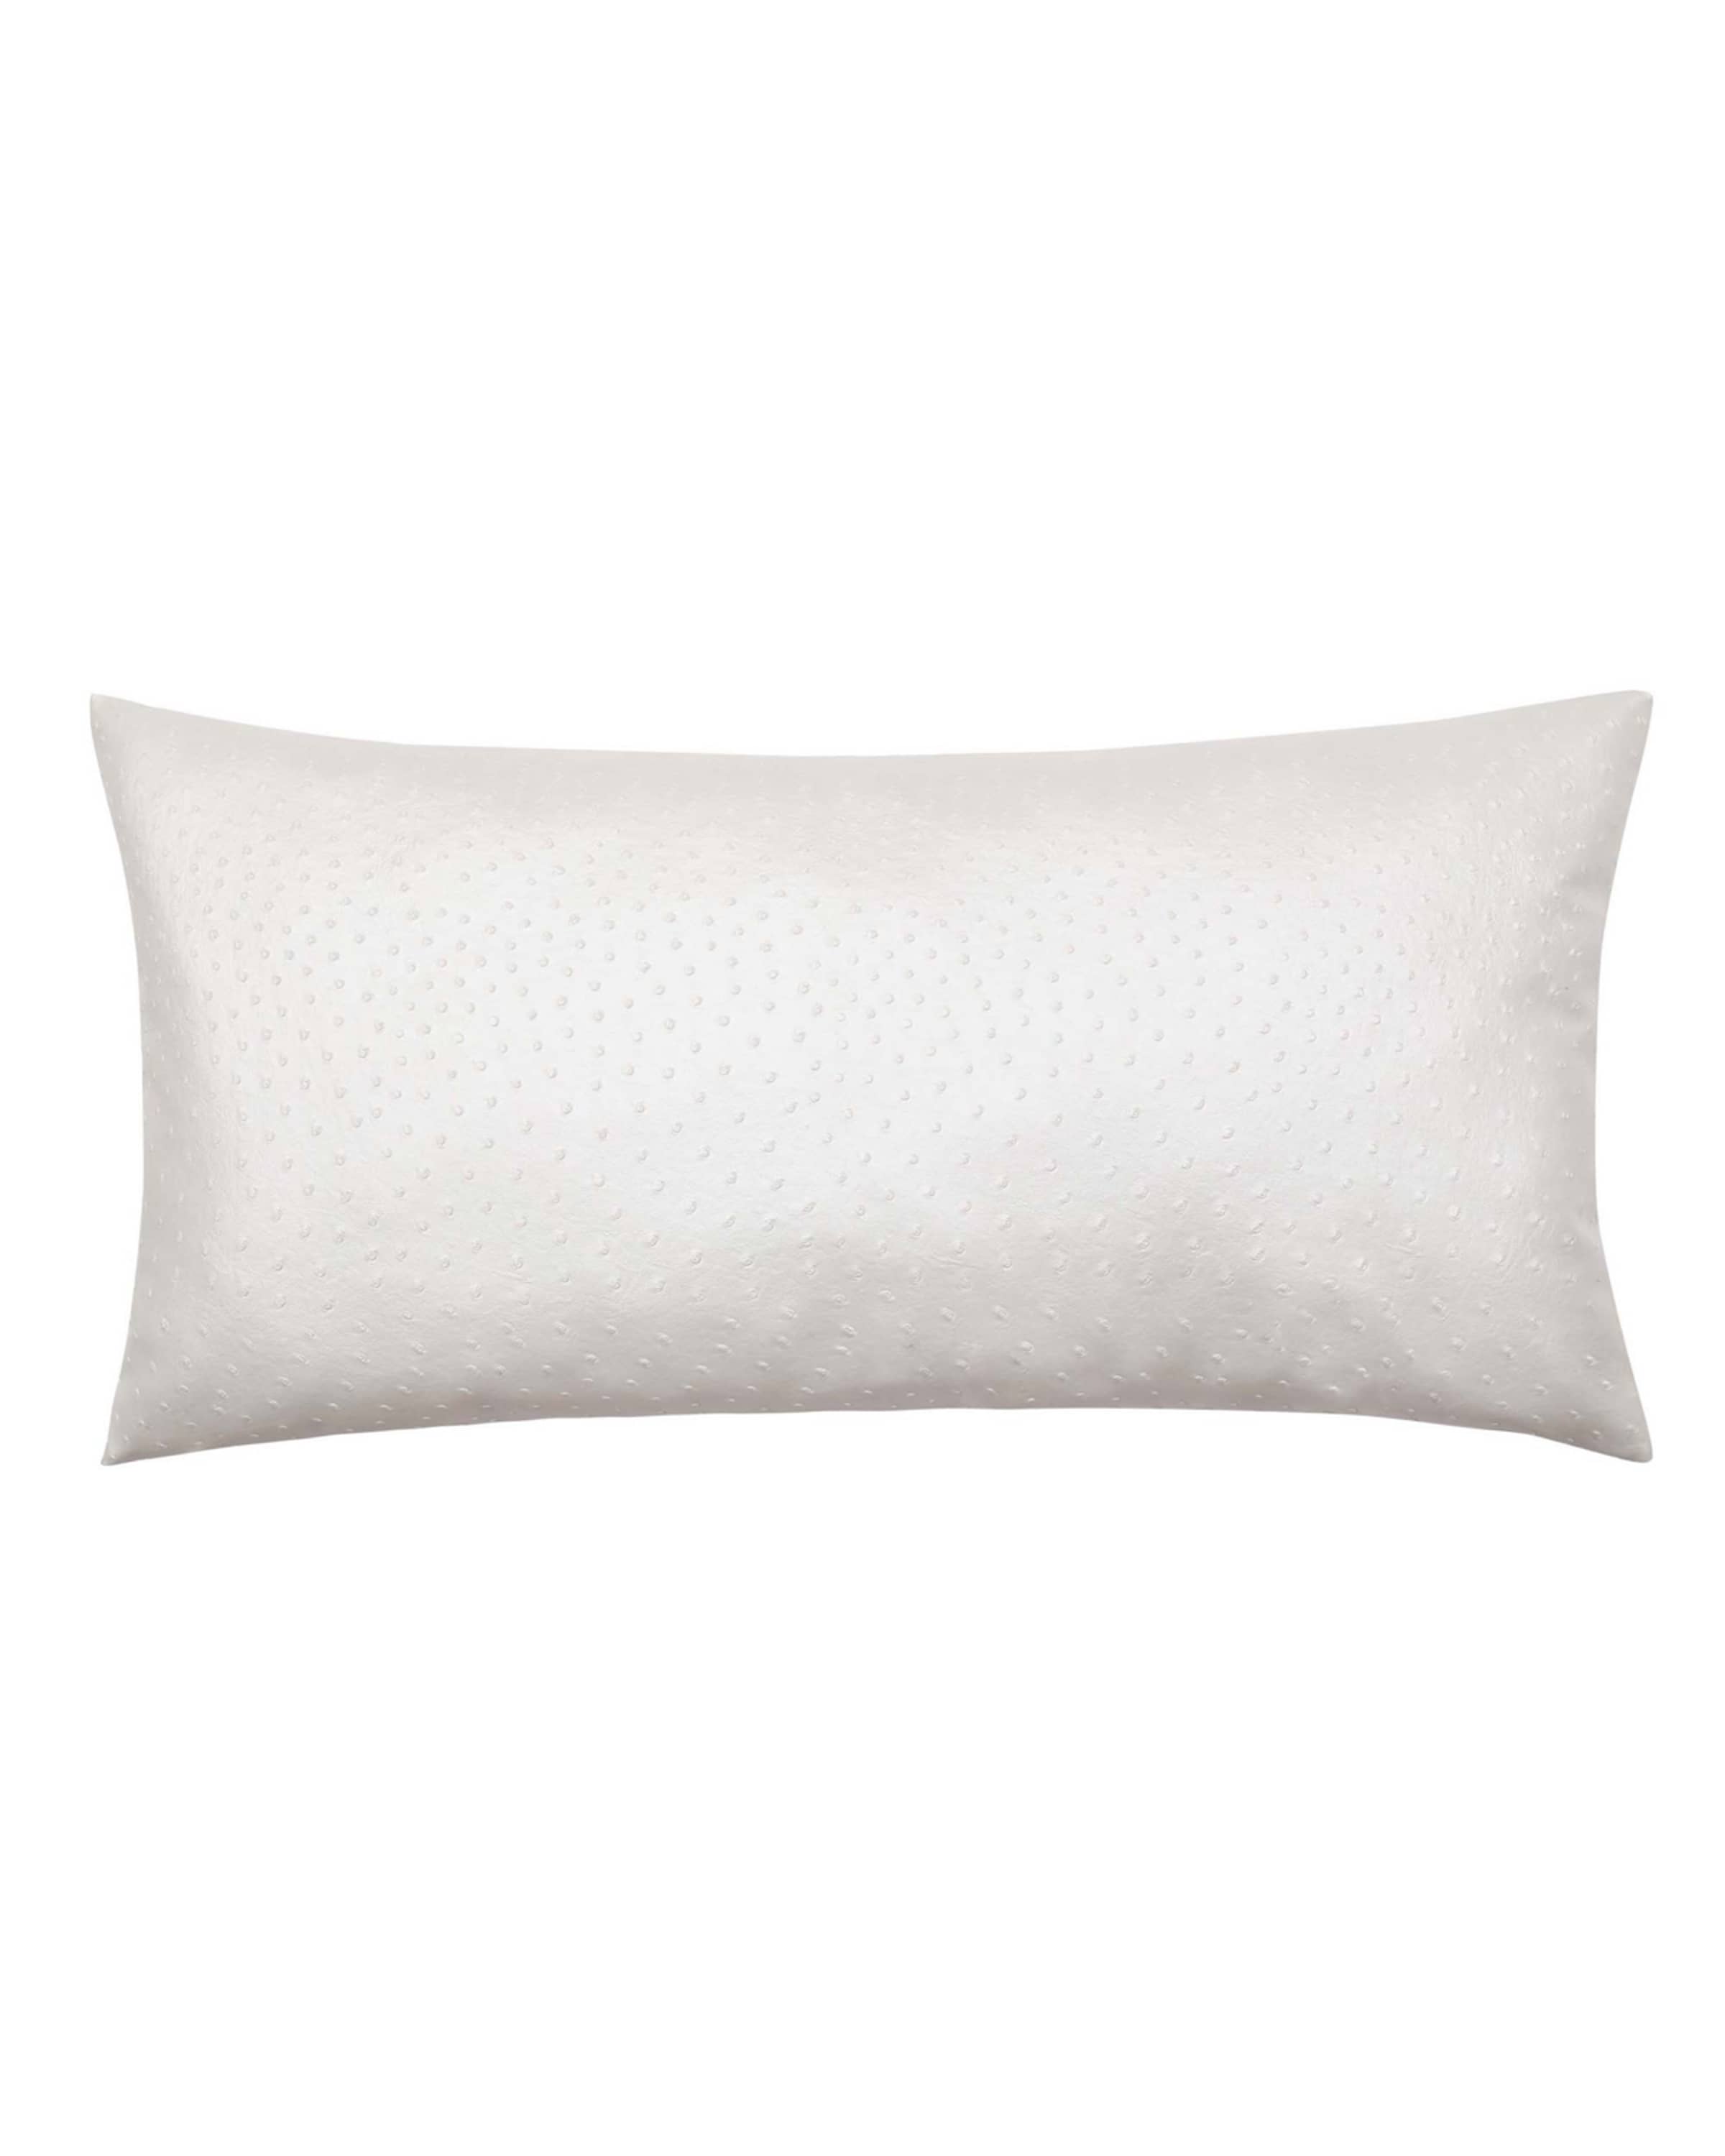 Charisma Paloma Decorative Pillow